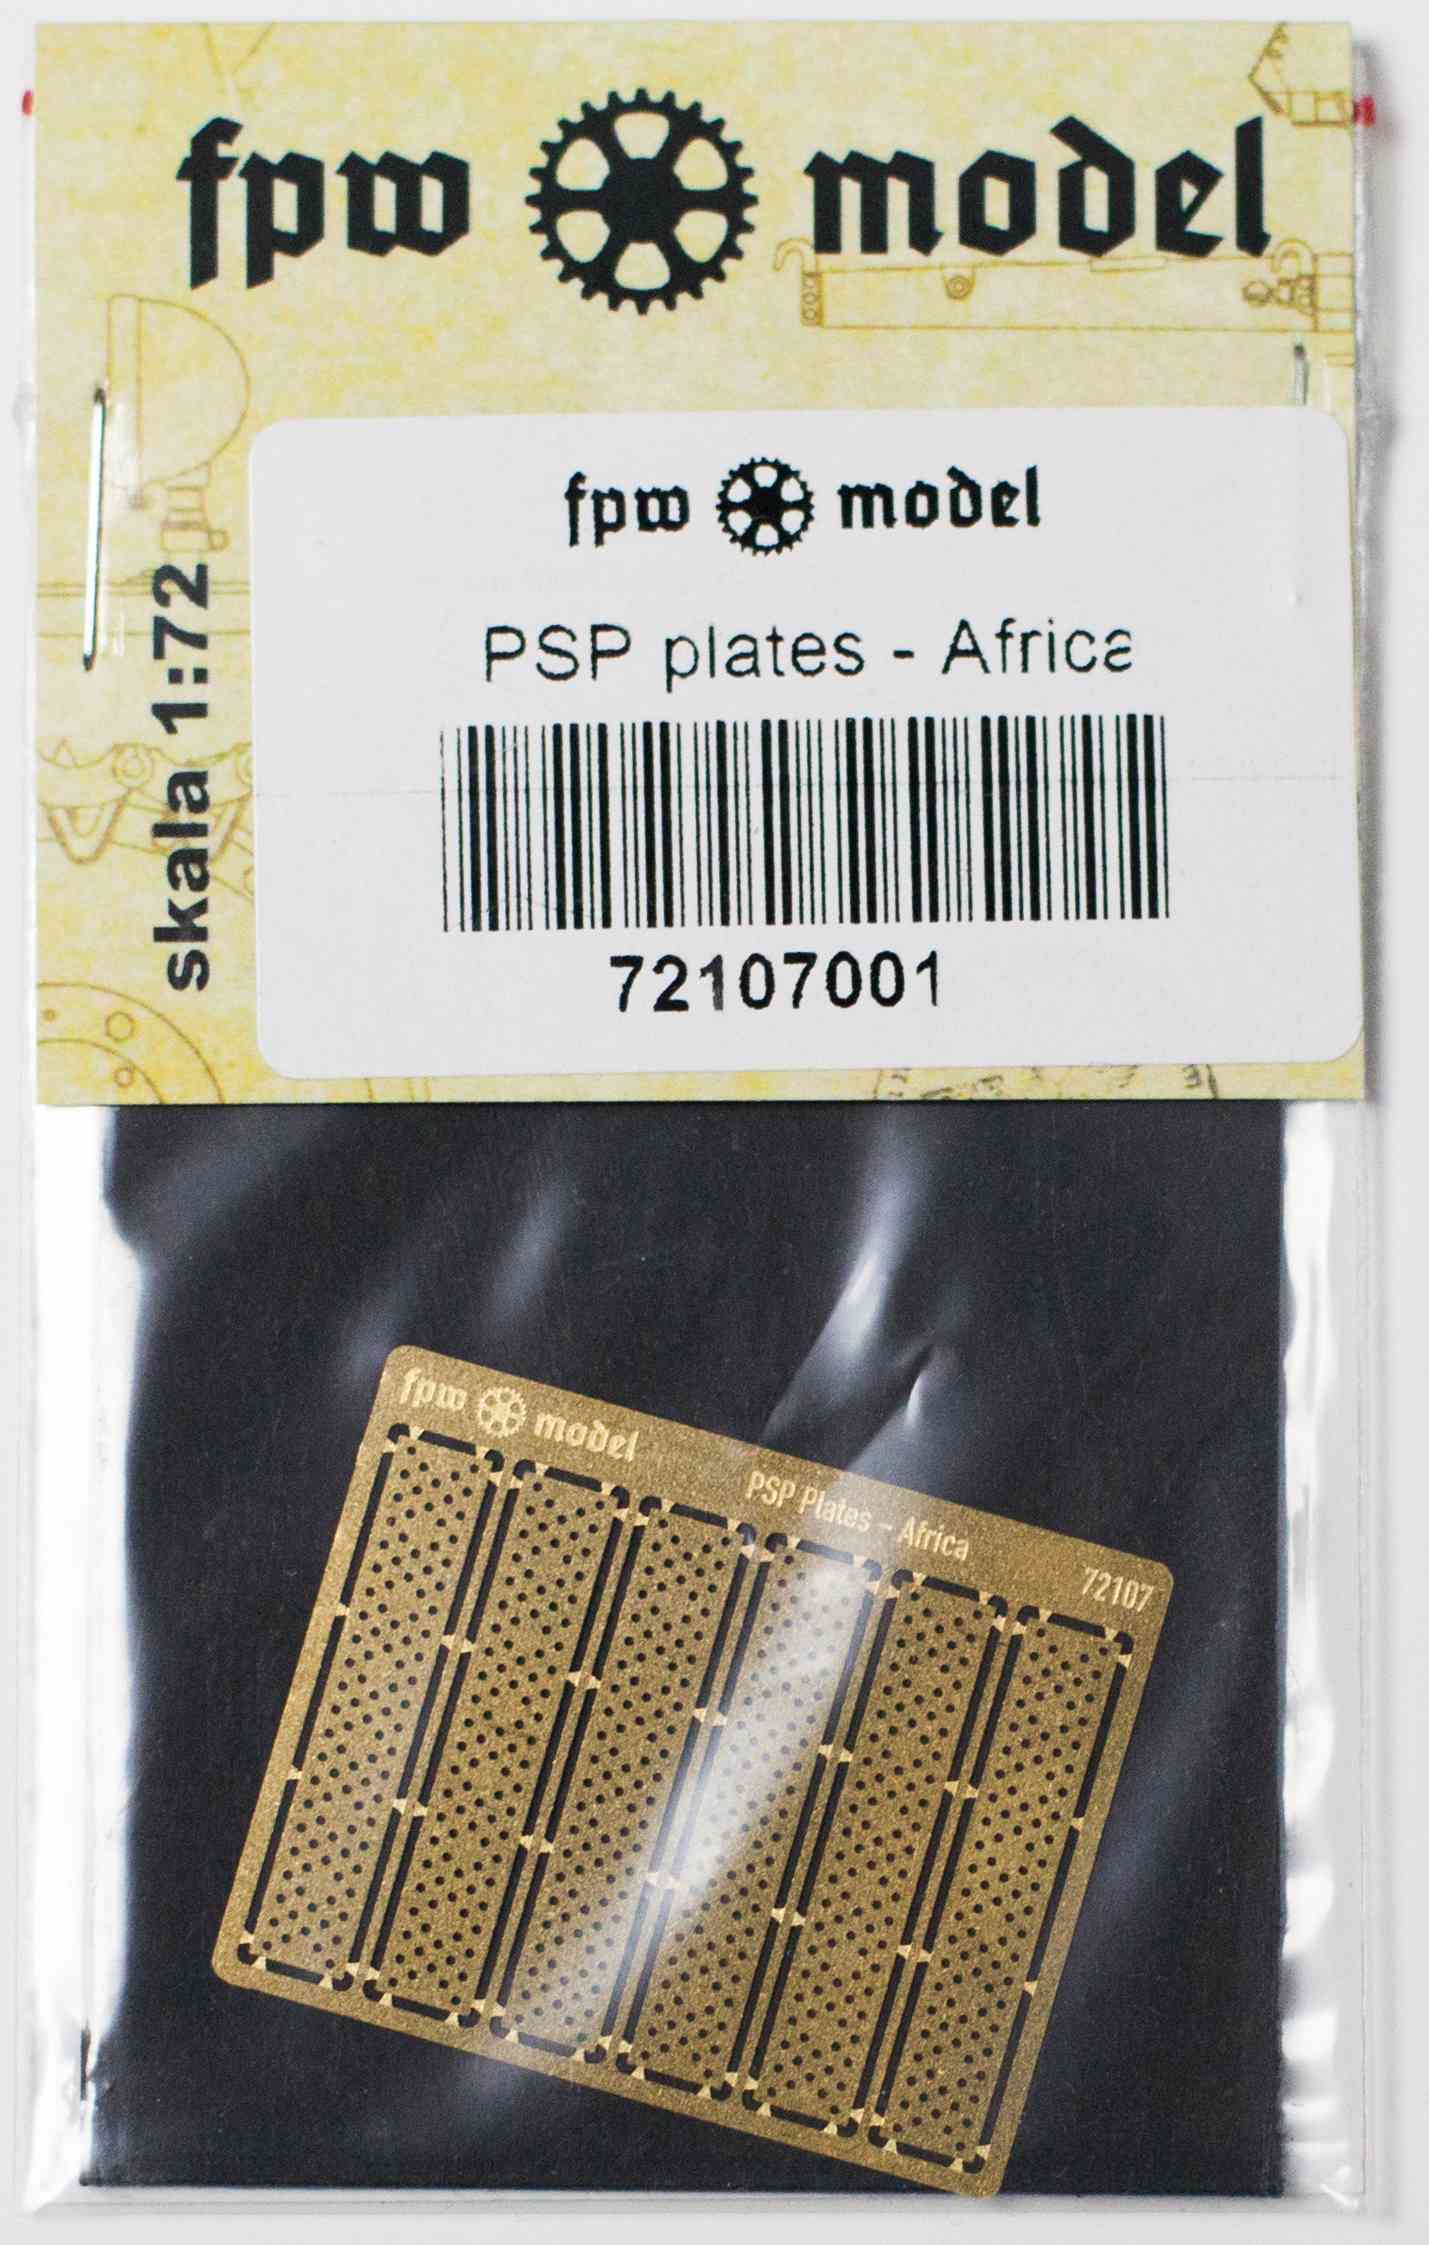 PSP plates